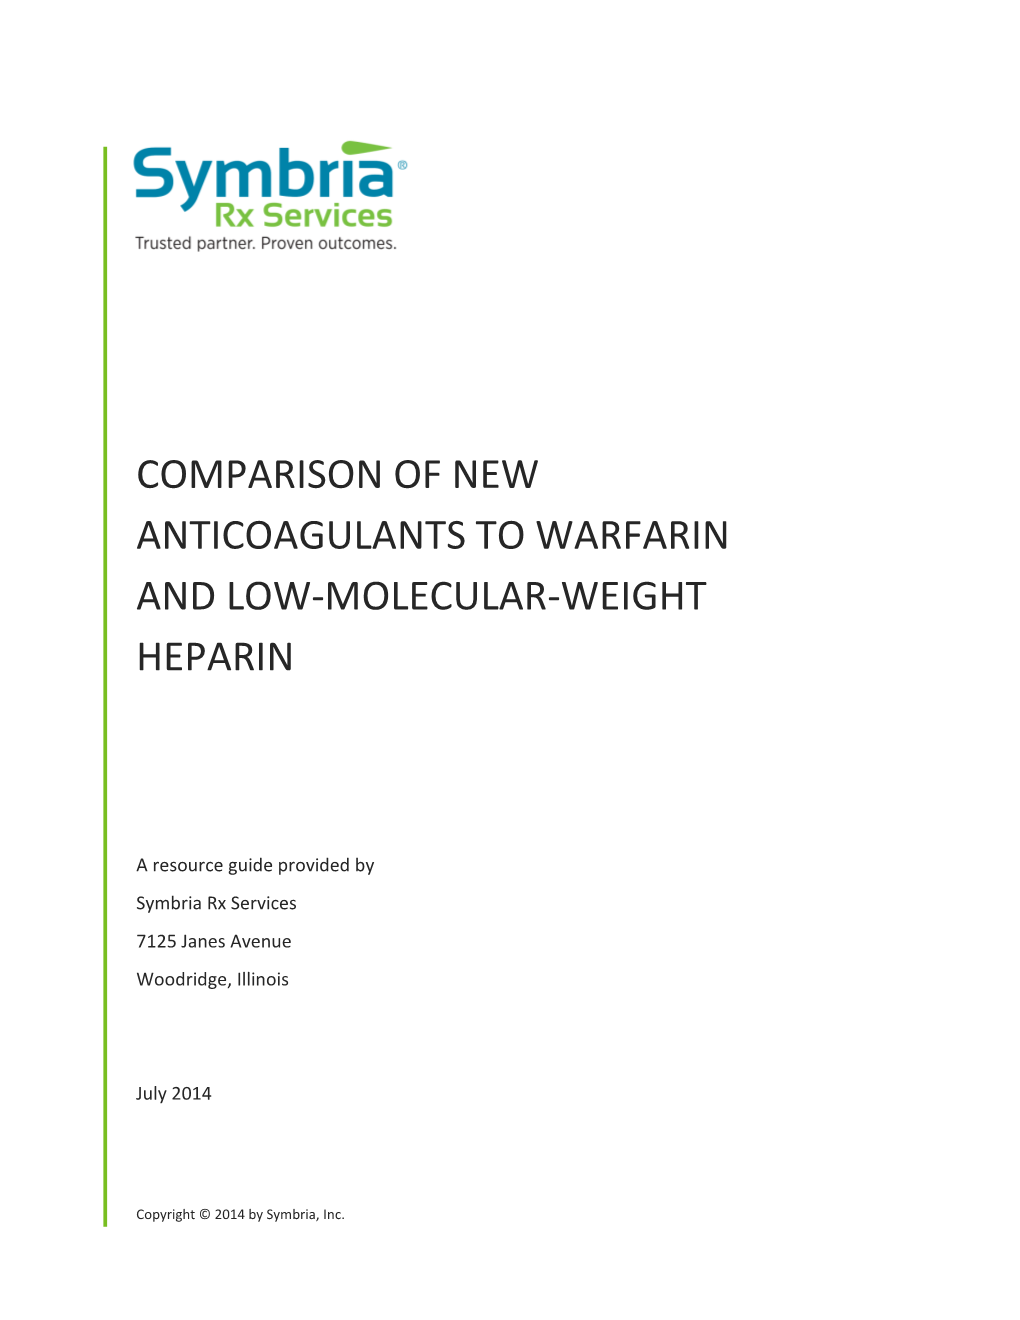 Comparison of New Anticoagulants to Warfarin and Low-Molecular-Weight Heparin